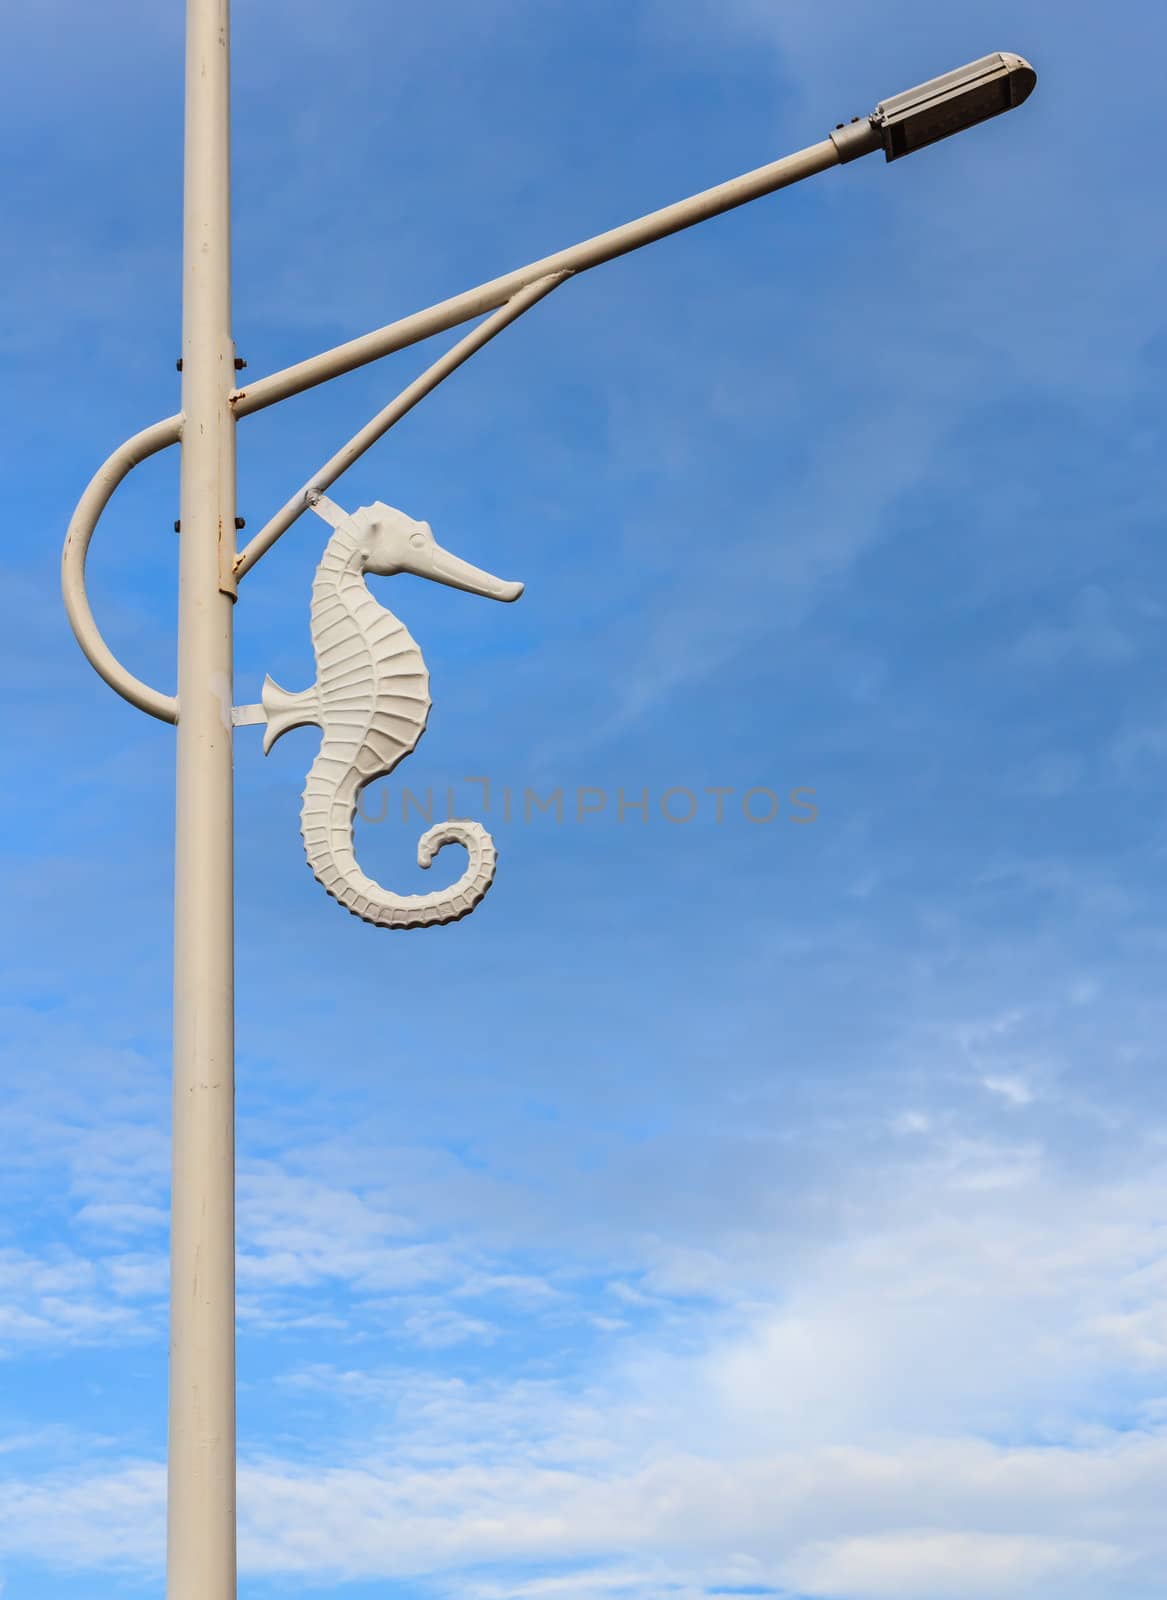 White sea horse street lamp in blue sky background